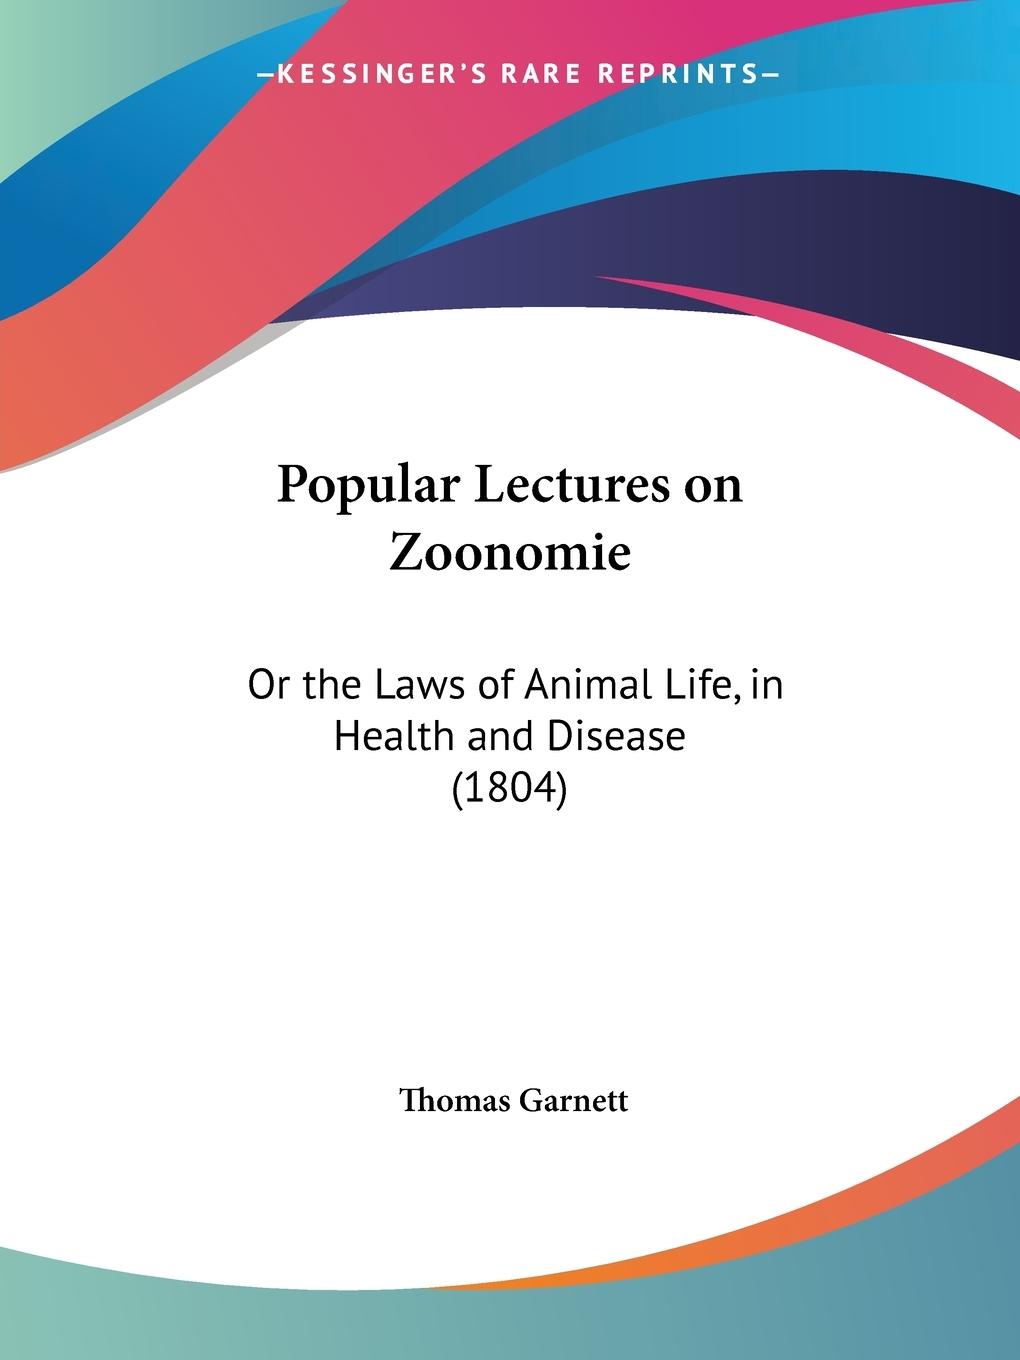 Popular Lectures on Zoonomie - Garnett, Thomas Ronald